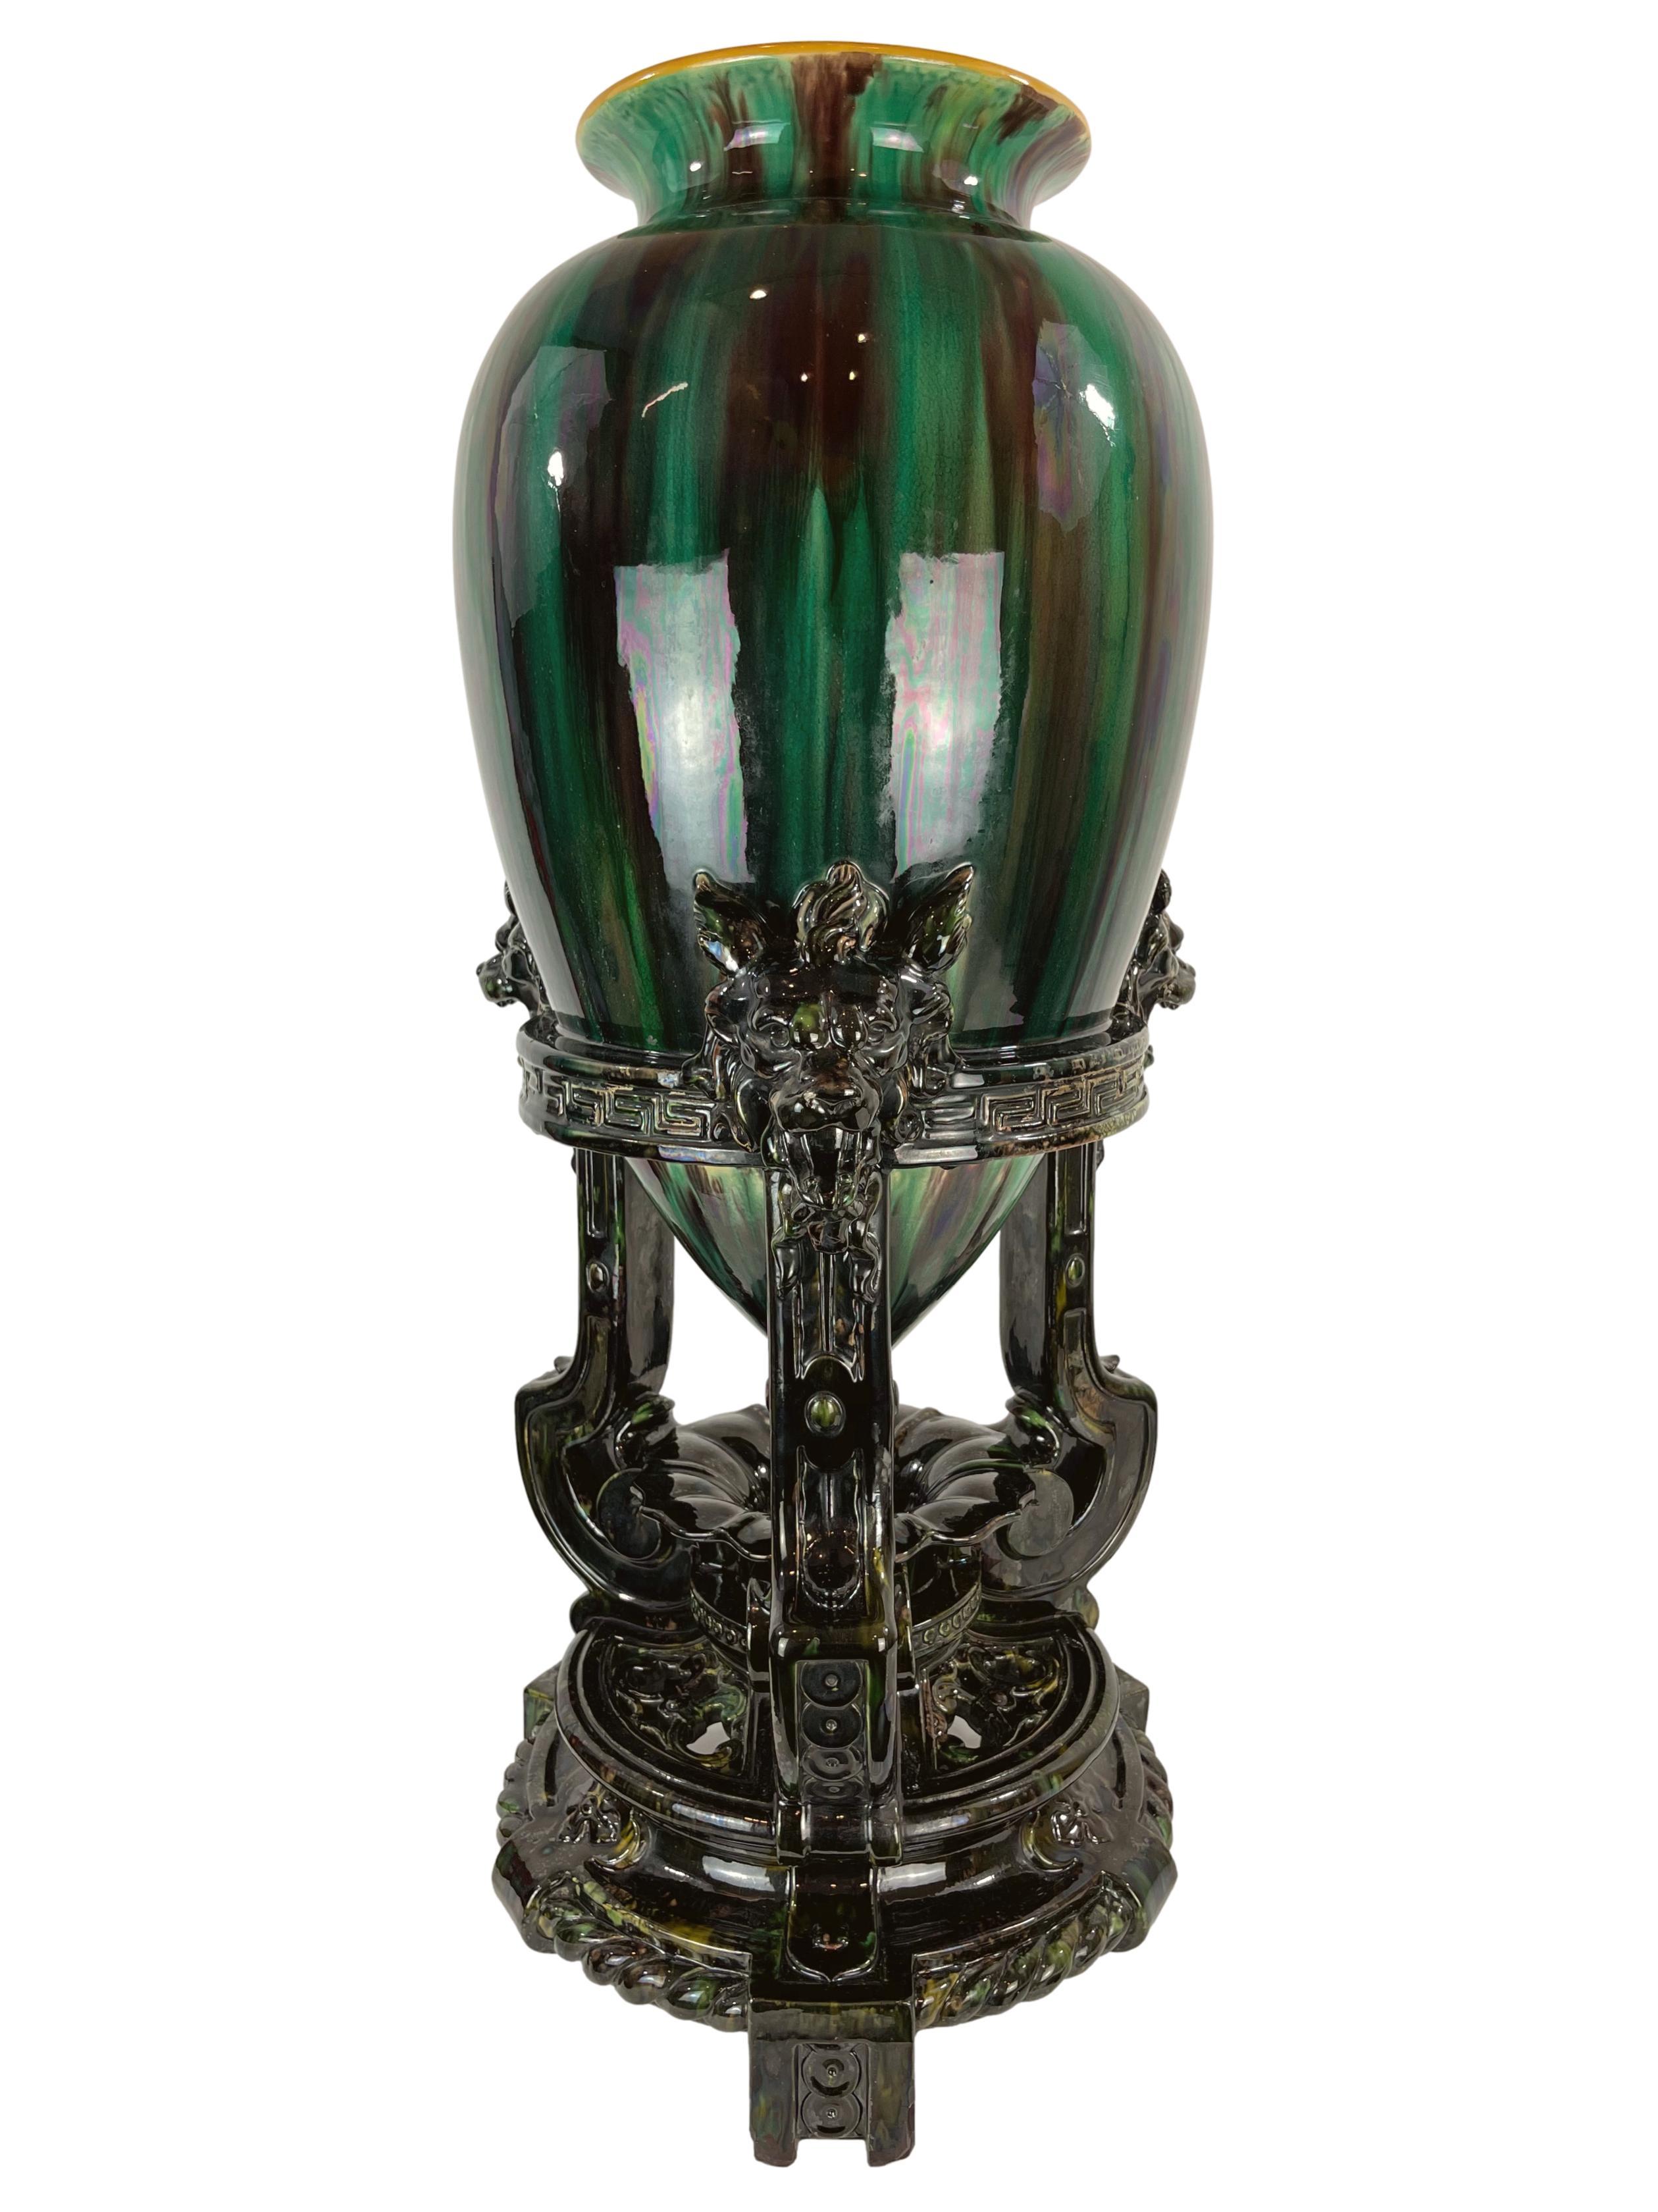 Molded Monumental Minton Majolica Amphora Vase, 1879, Attrib. to Christopher Dresser